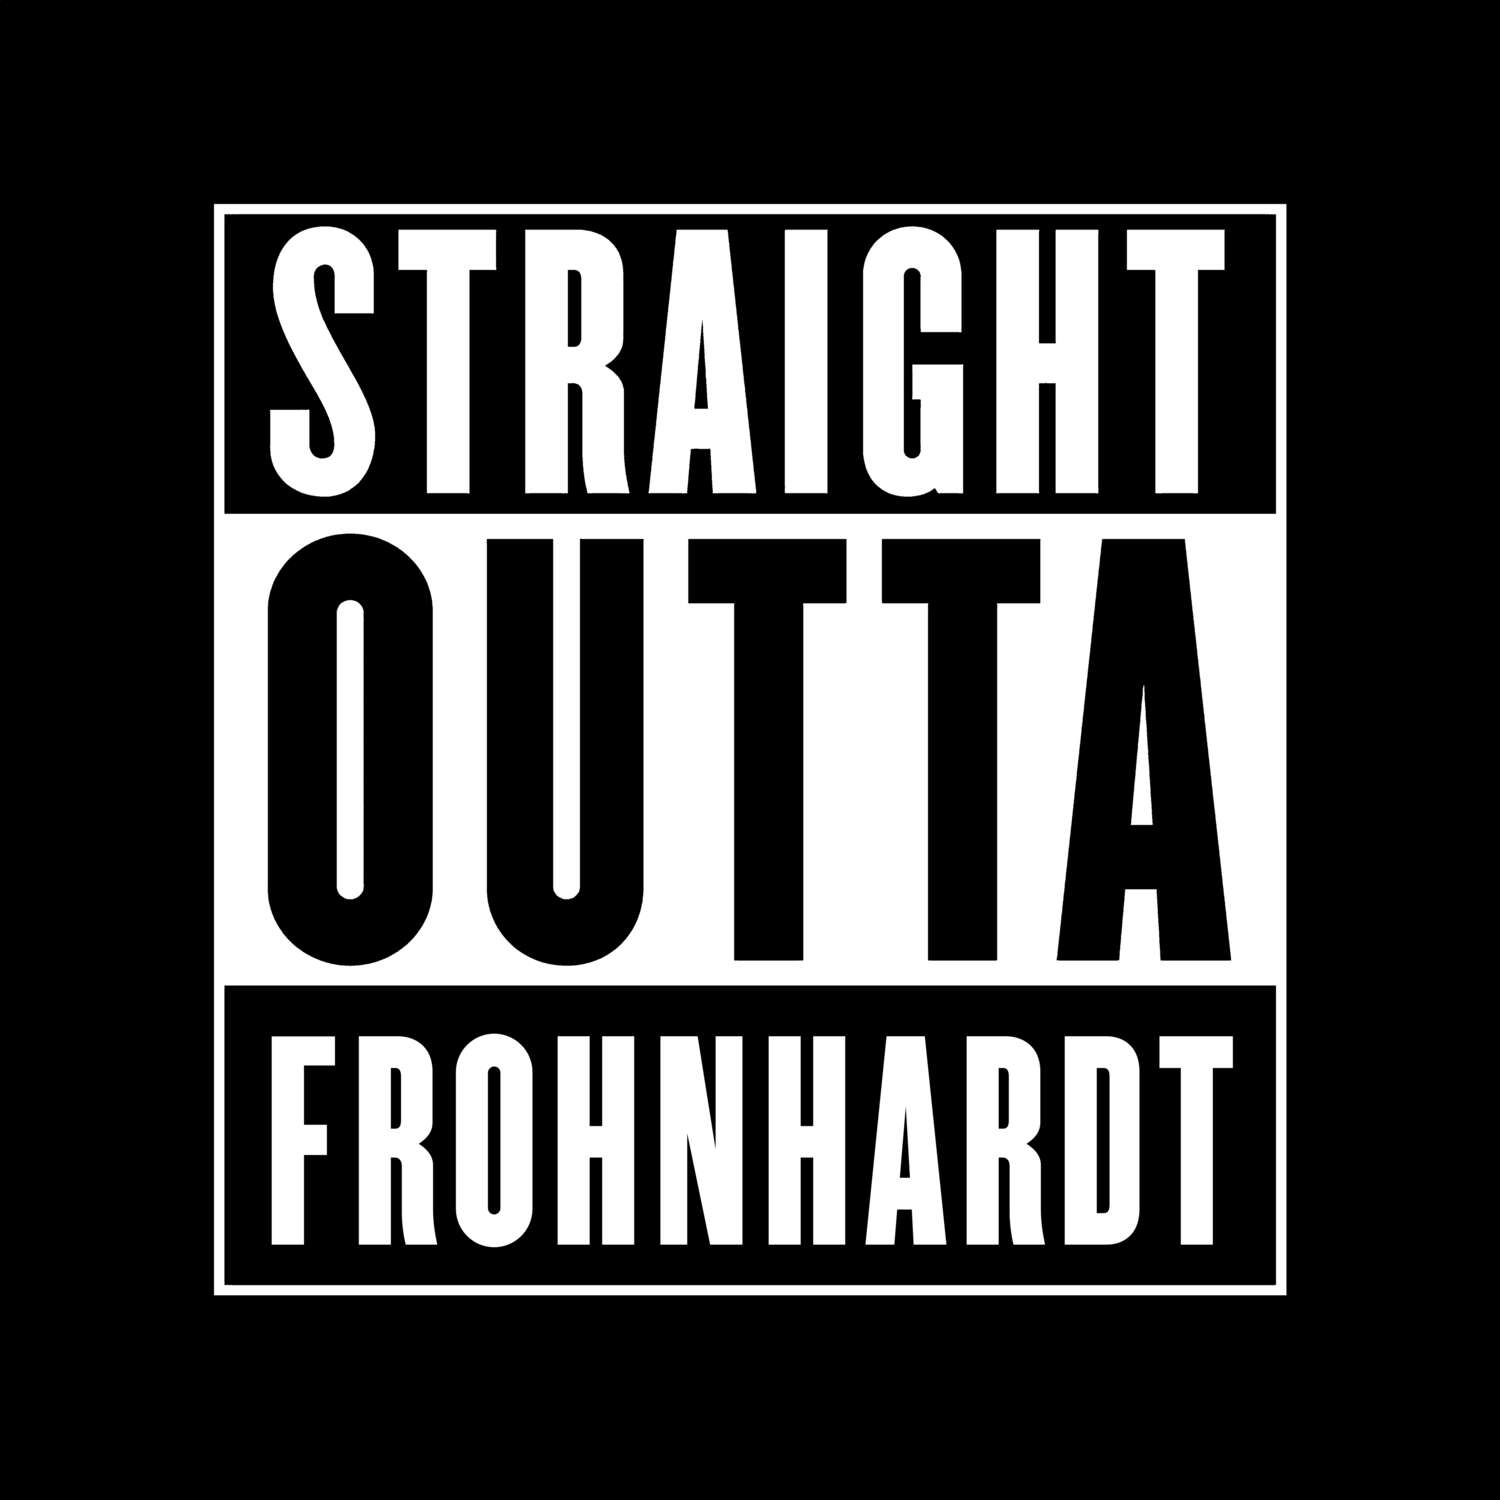 Frohnhardt T-Shirt »Straight Outta«